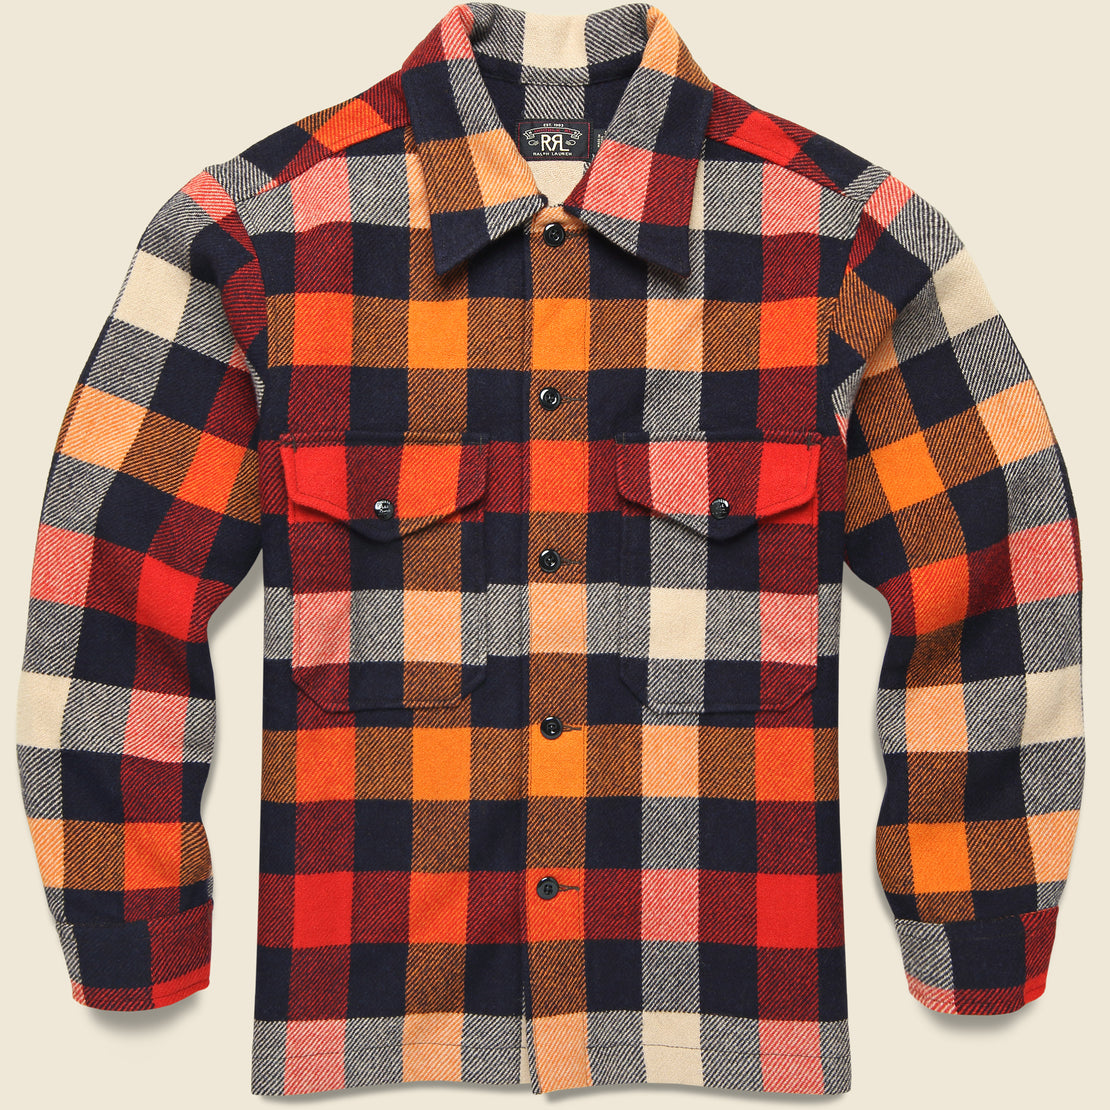 RRL Wool Shirt Jacket - Orange Multi Plaid